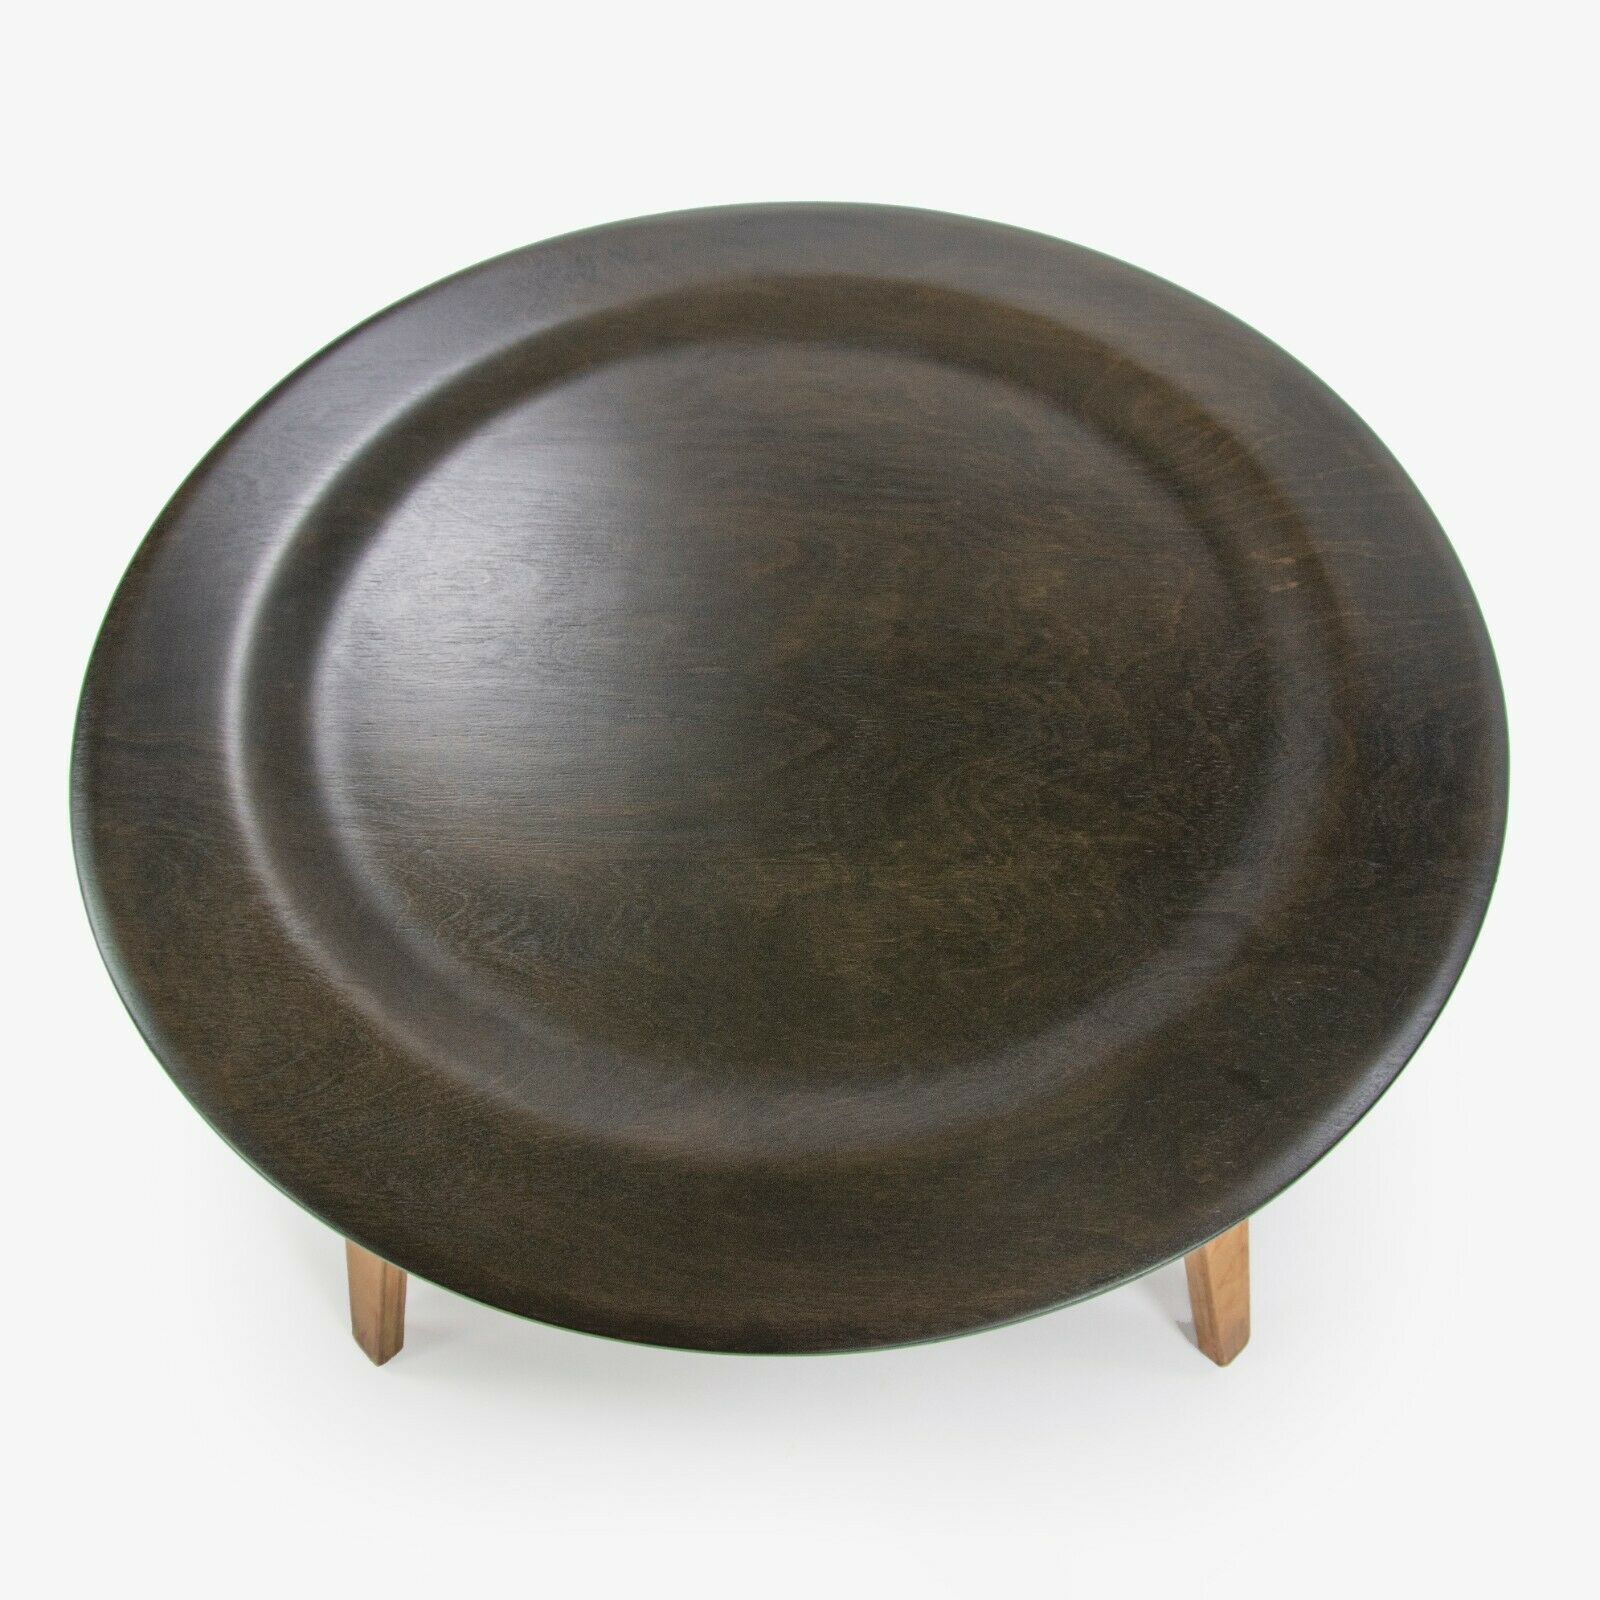 SOLD 1948 Vintage Eames Evans Herman Miller CTW 2-Tone Round Wood Coffee Table Birch